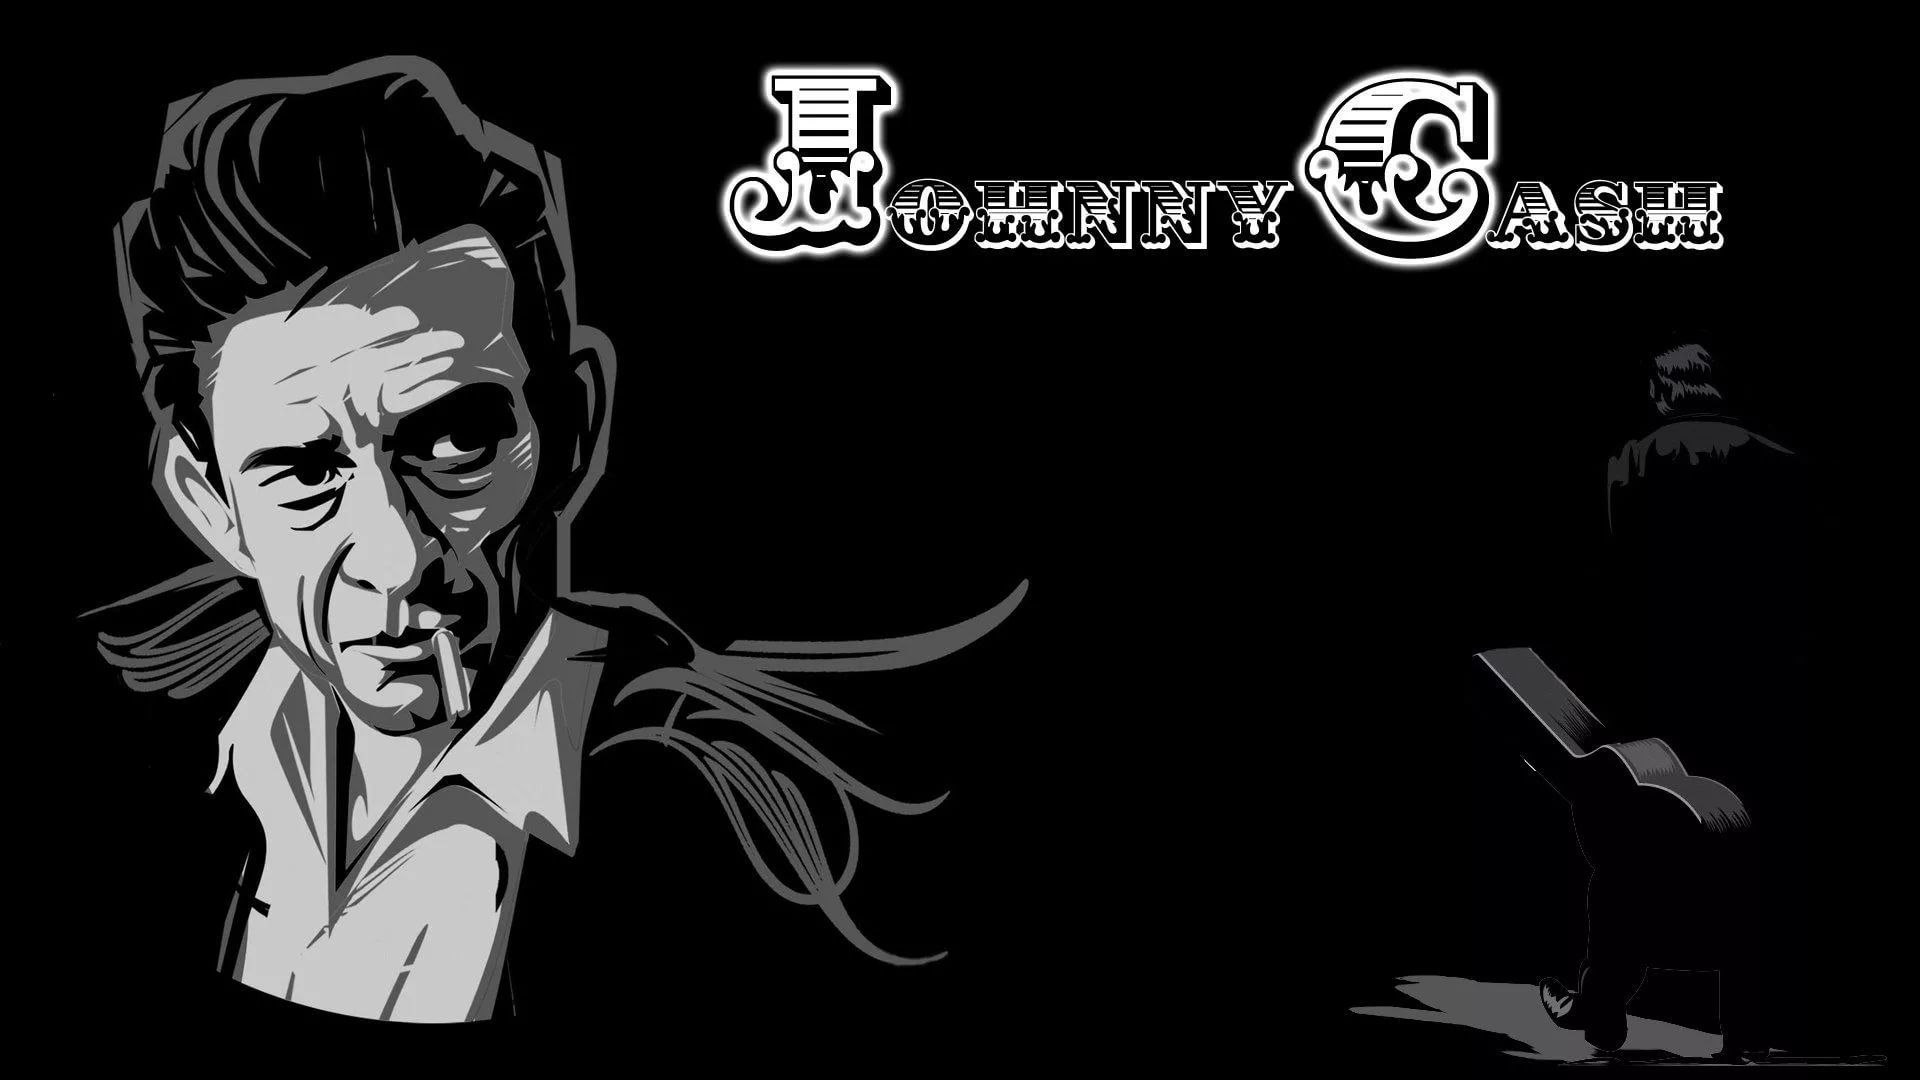 Johnny Cash desktop wallpaper